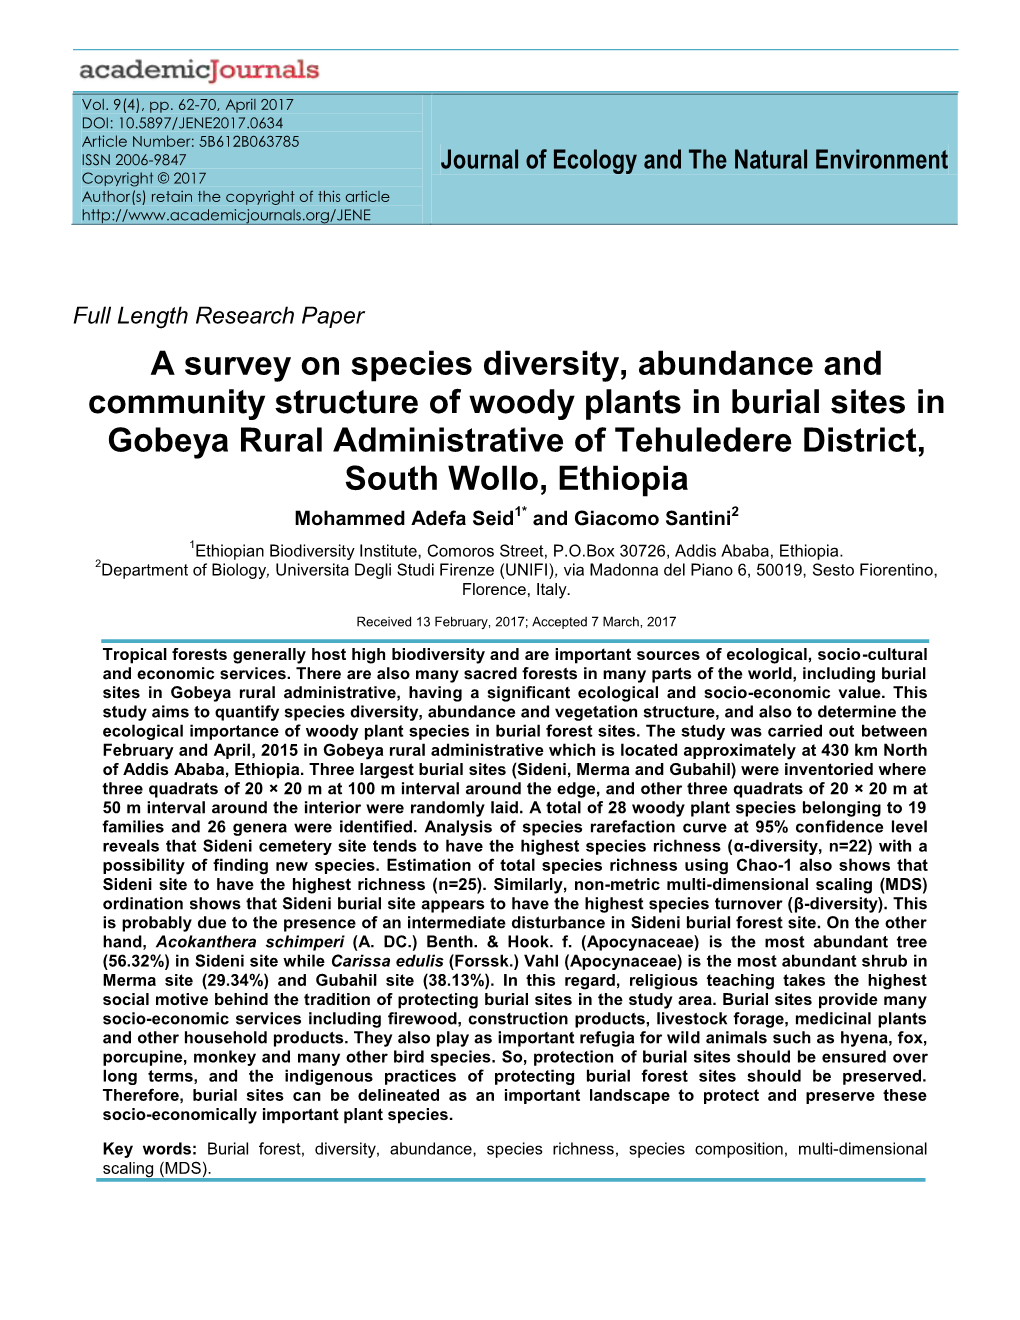 A Survey on Species Diversity, Abundance and Community